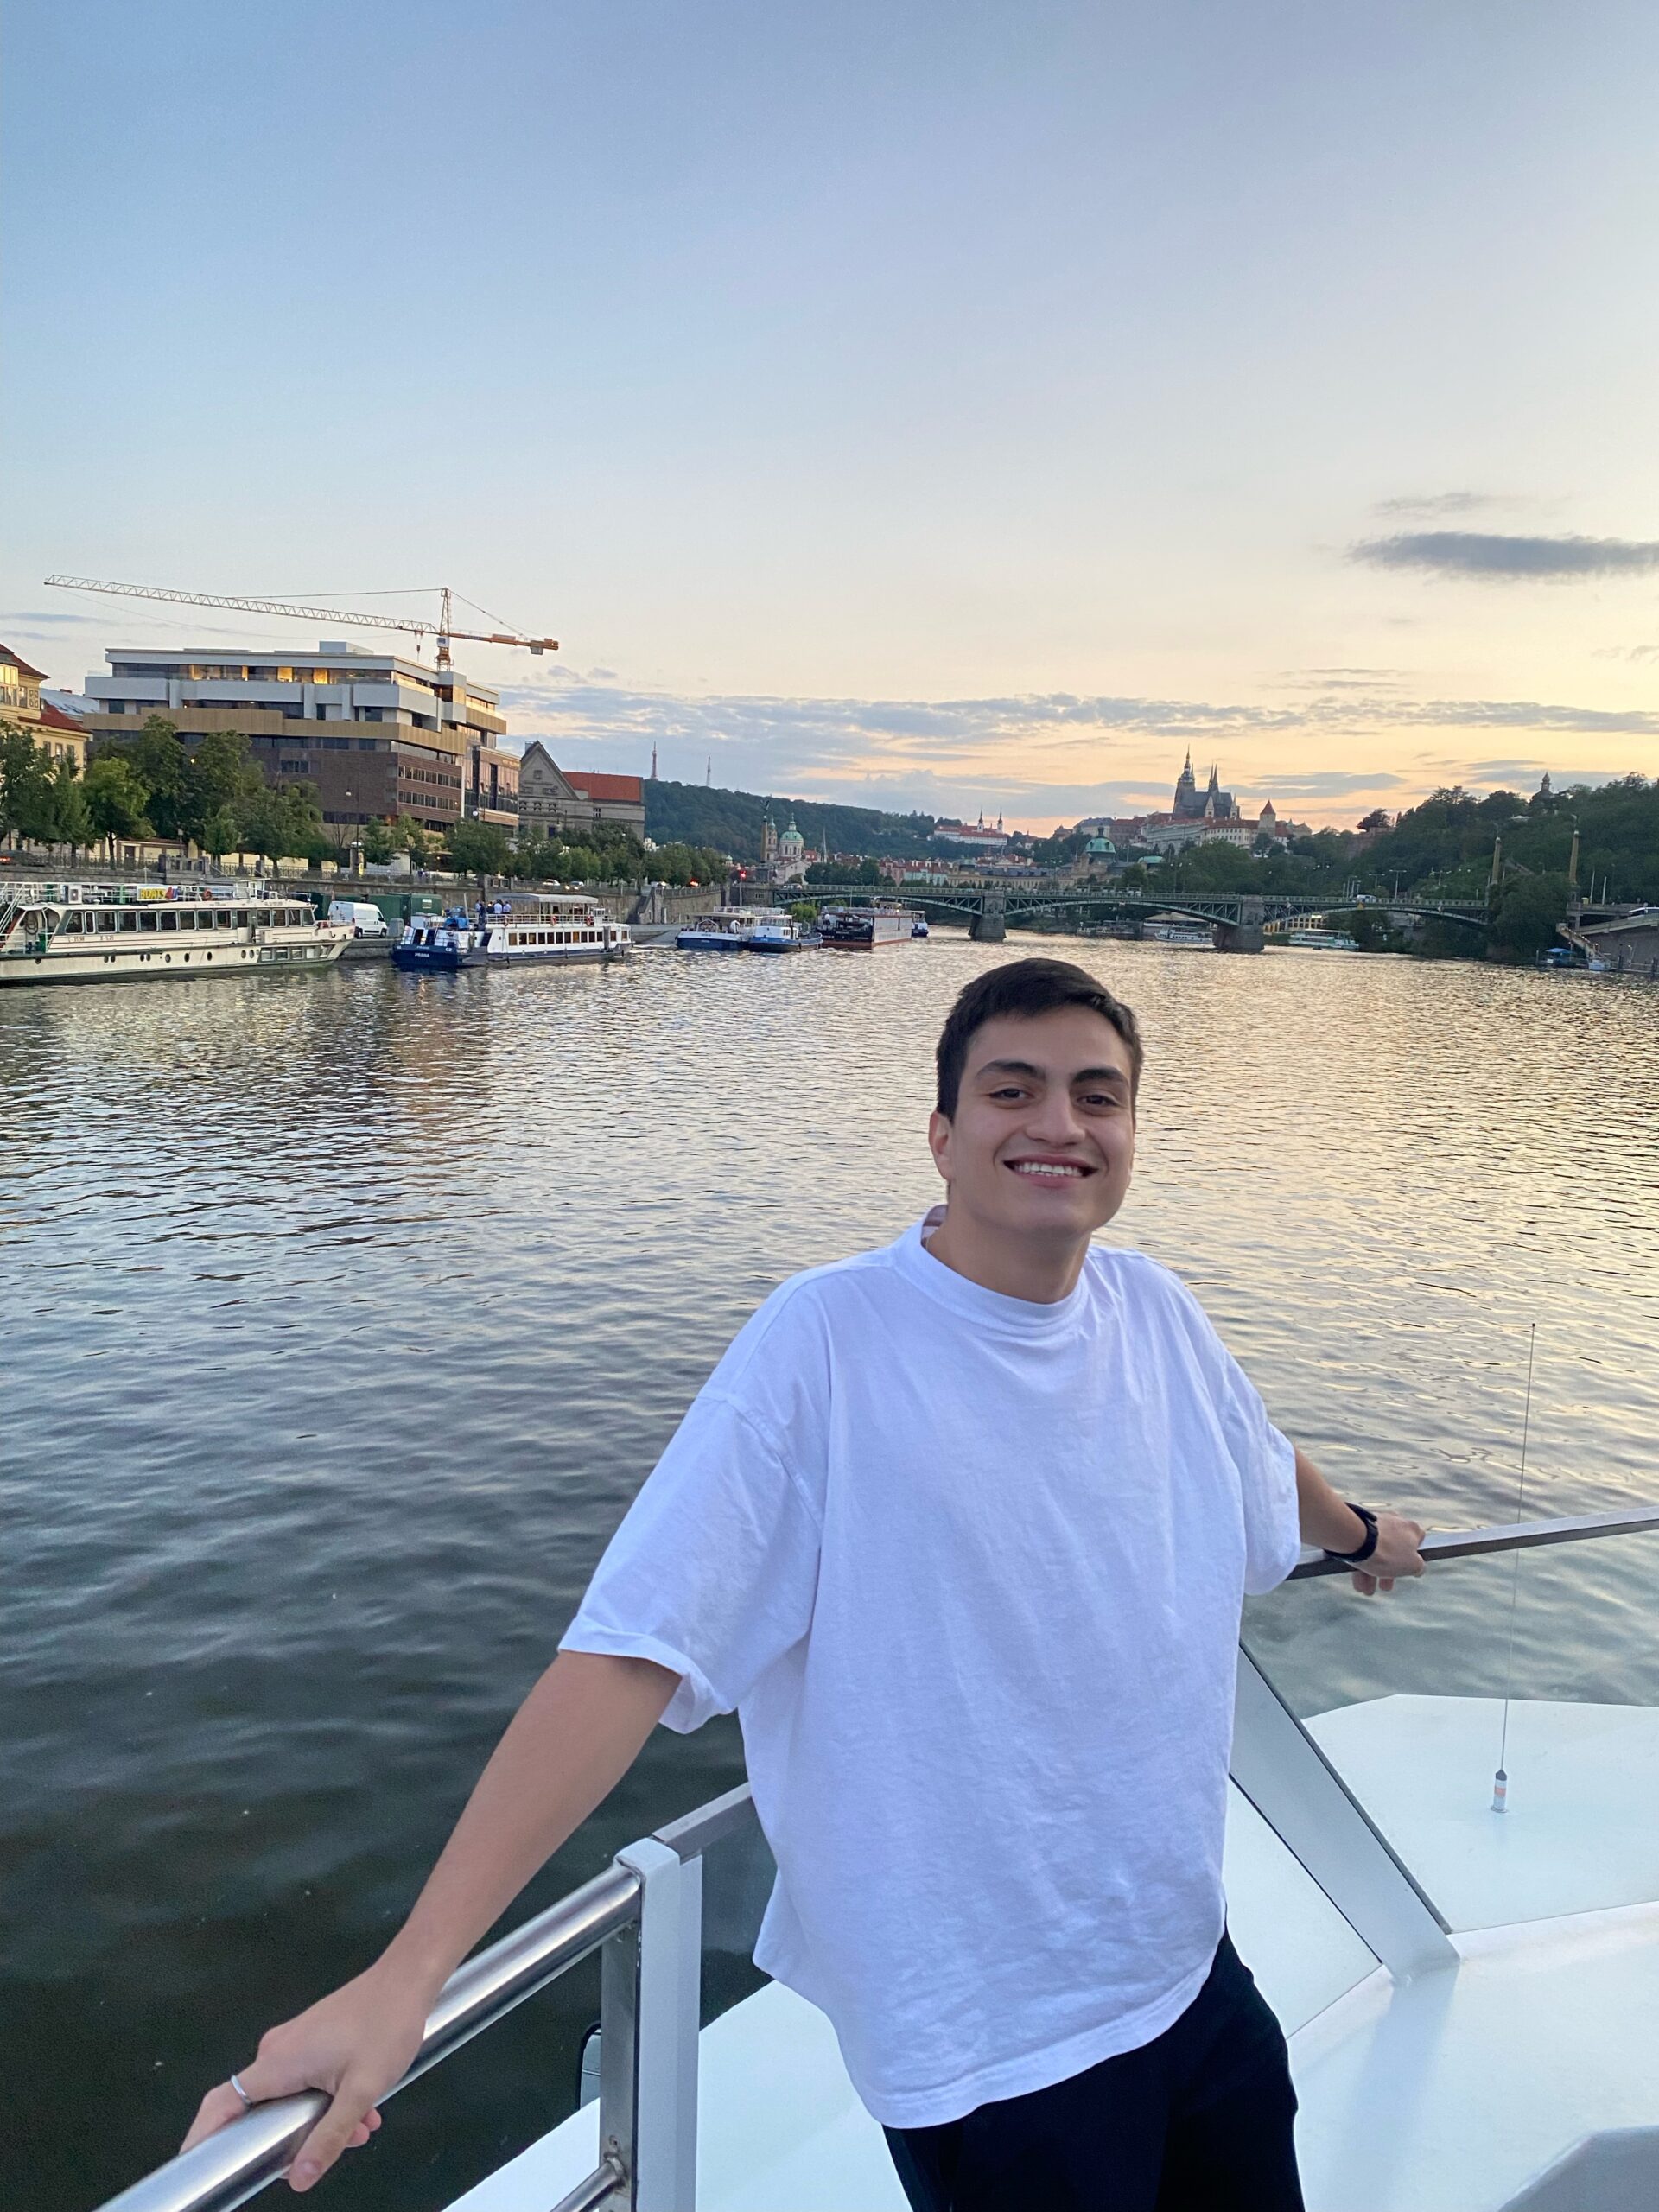 Photo of Emmanuel Rodriguez-Rivera on a boat